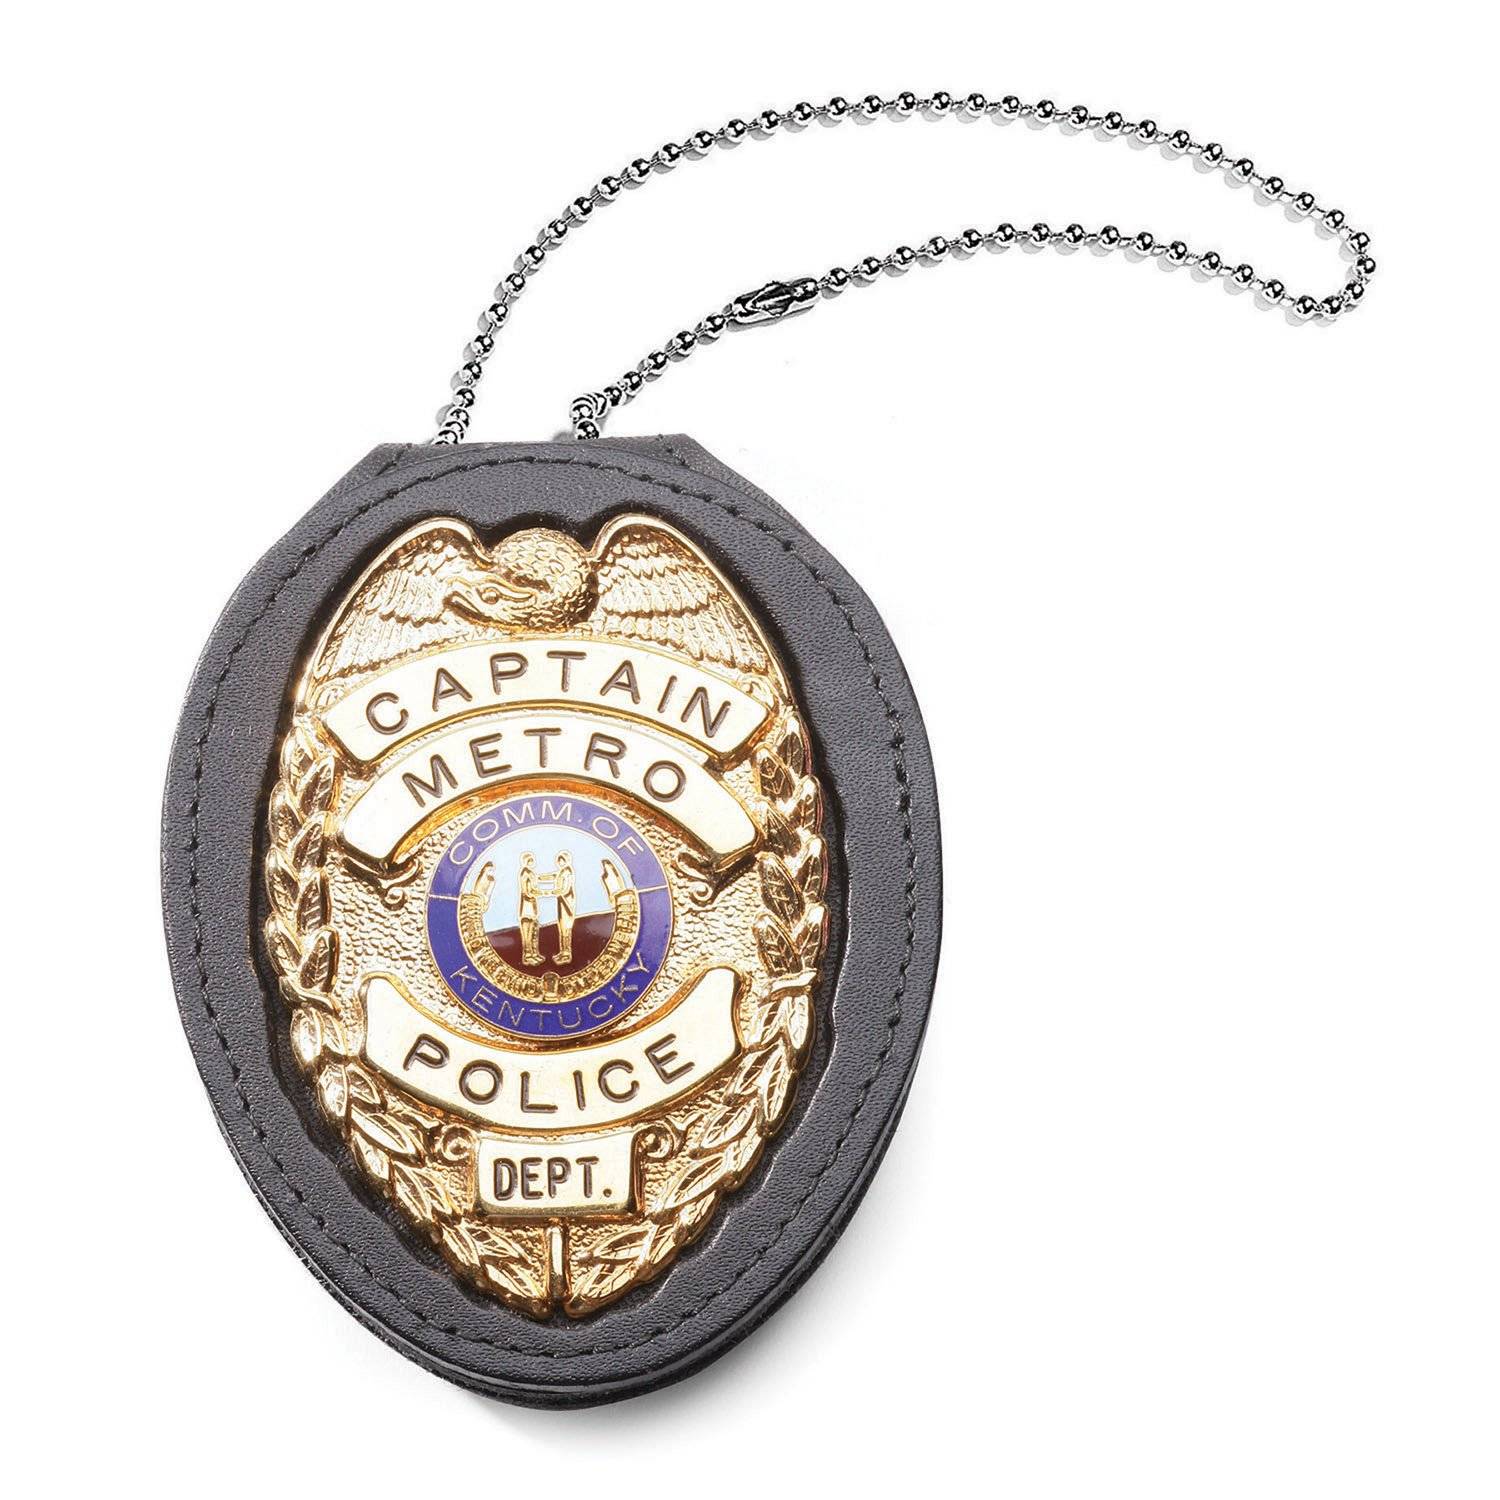  ASR Federal Leather Universal Fit Police Badge Holder